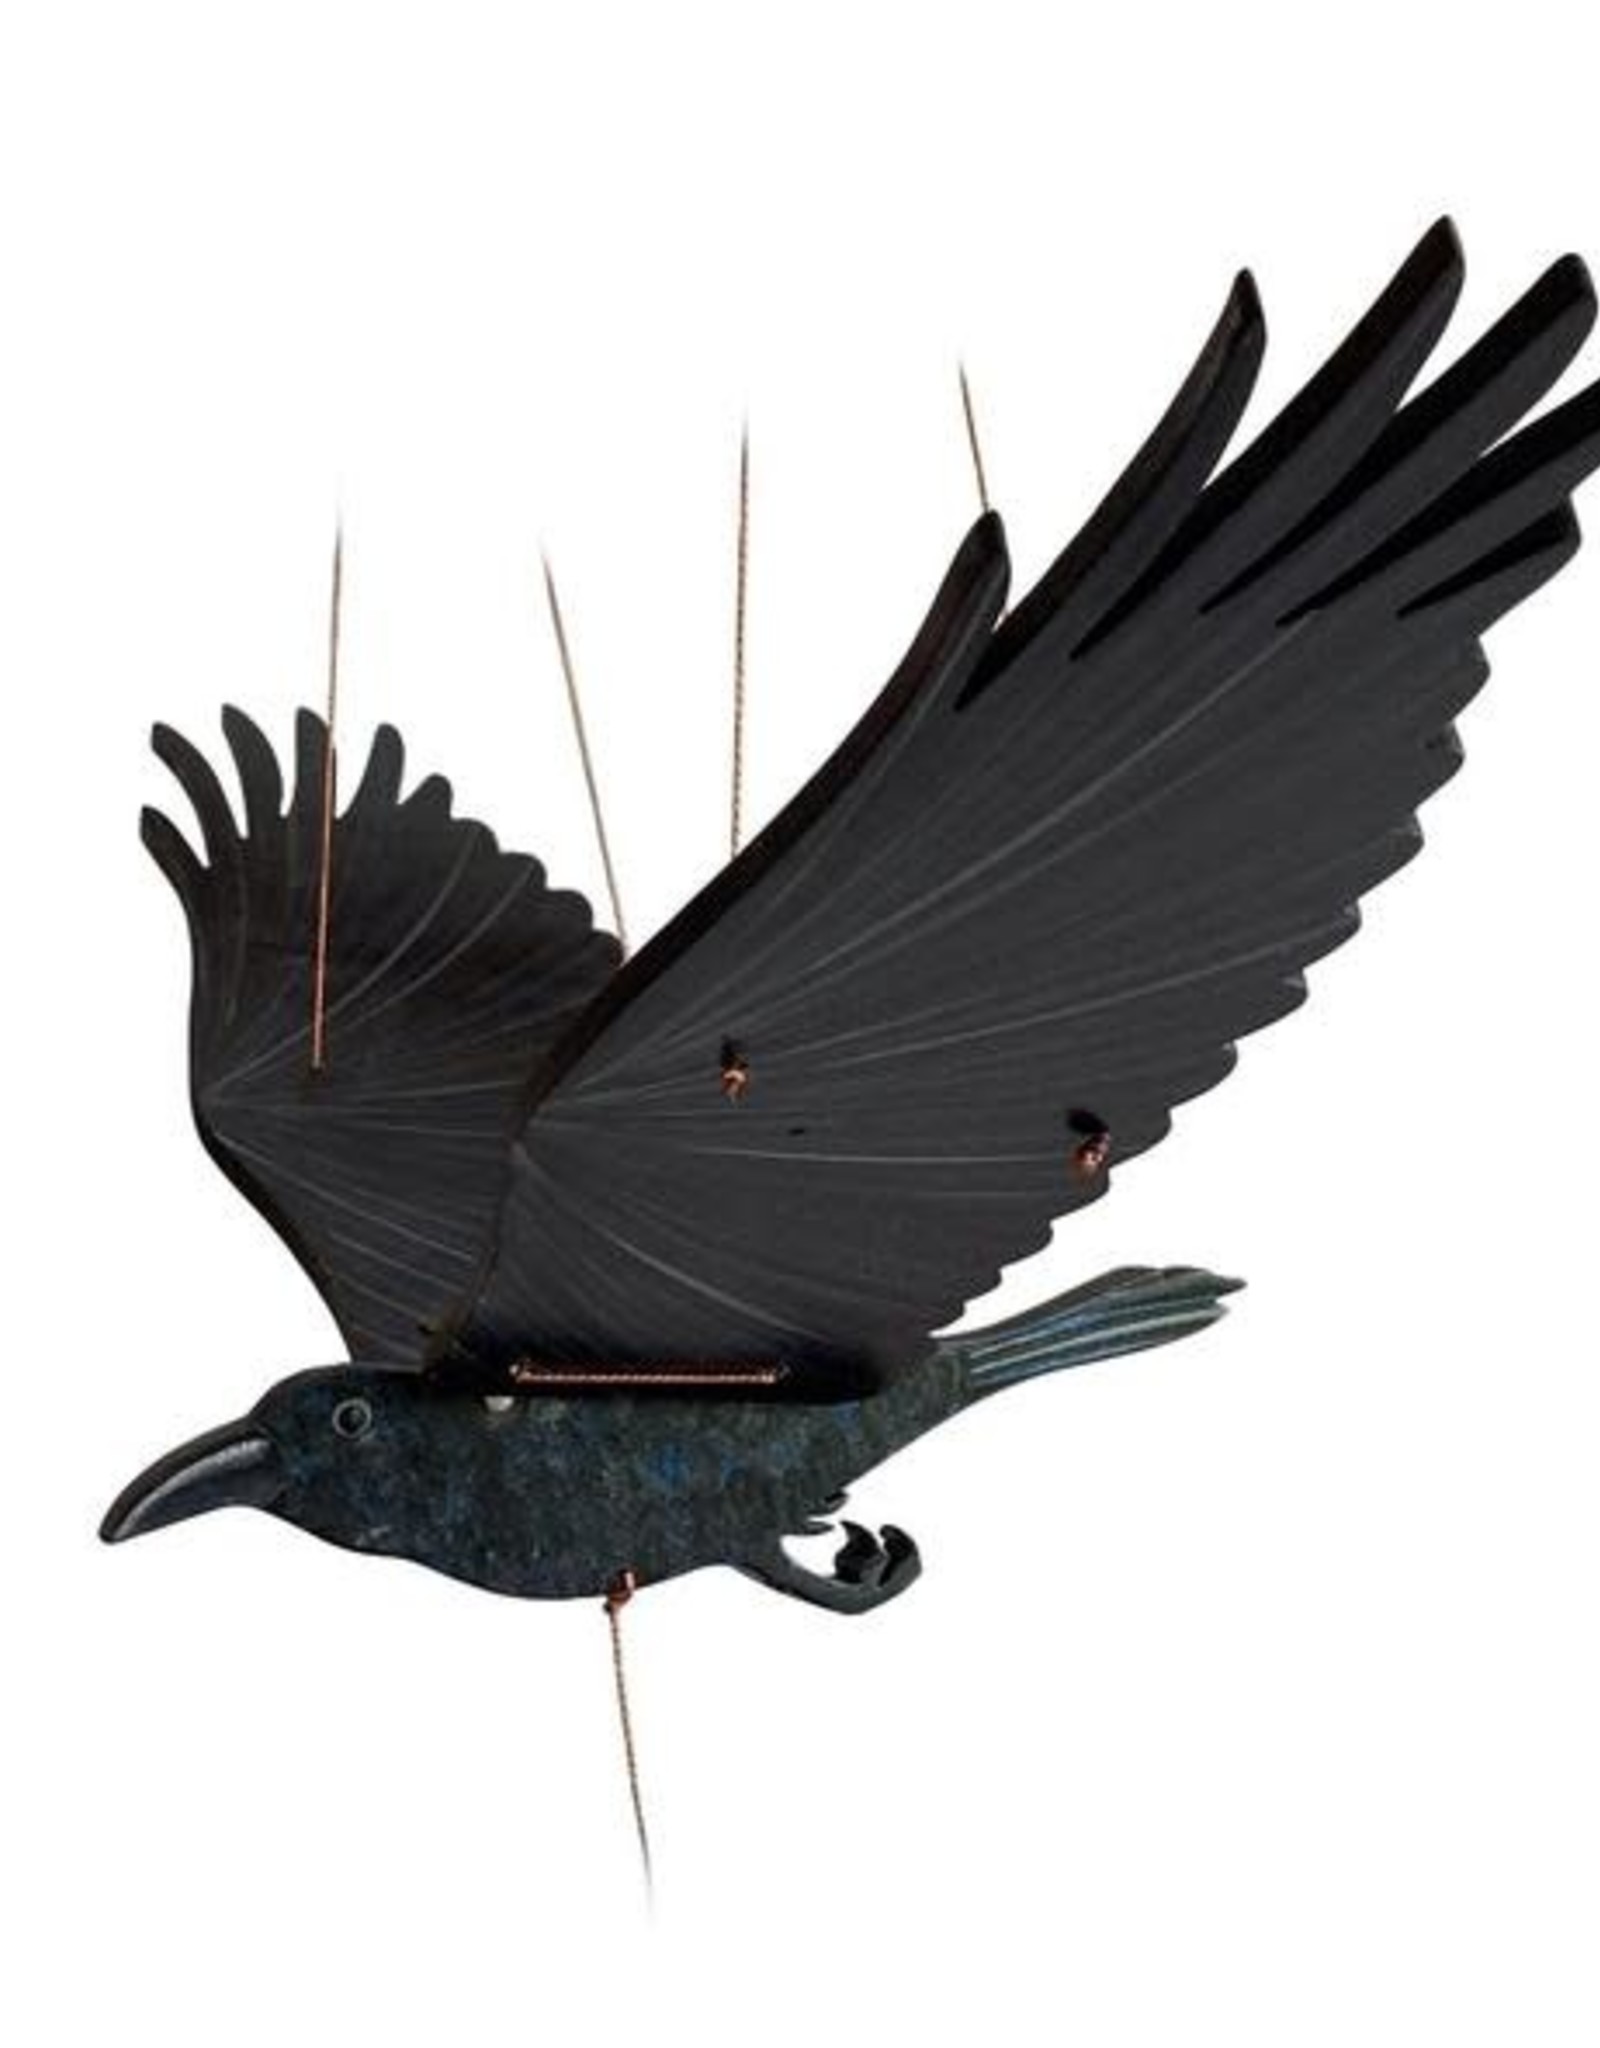 Tulia Artisans Raven Crow Blackbird Flying Mobile